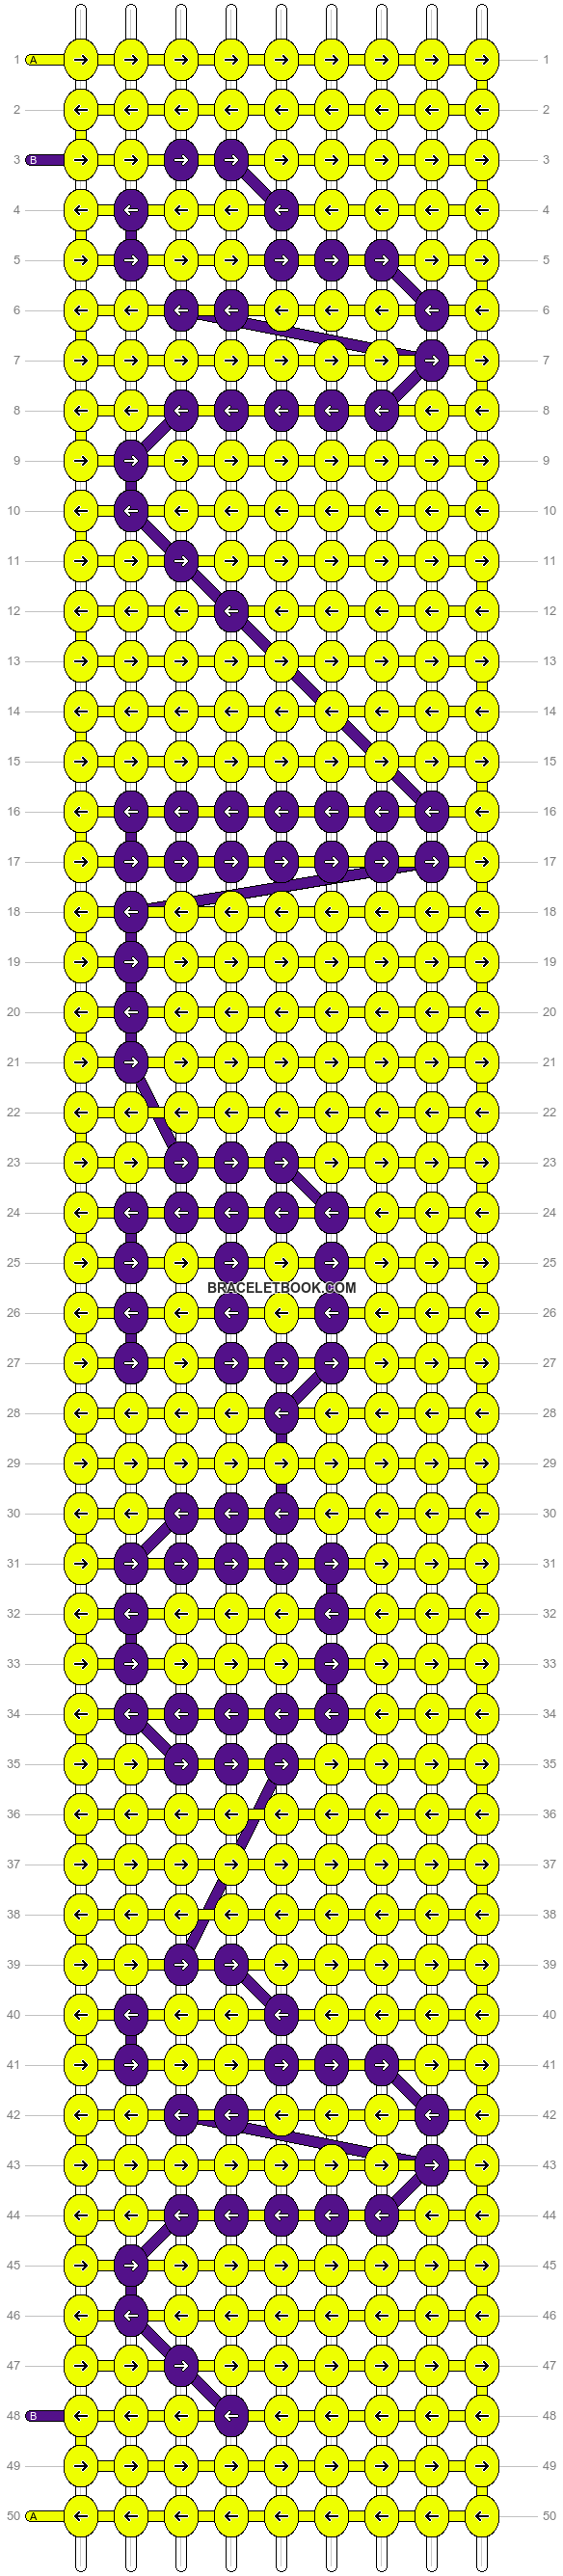 Alpha pattern #6174 pattern